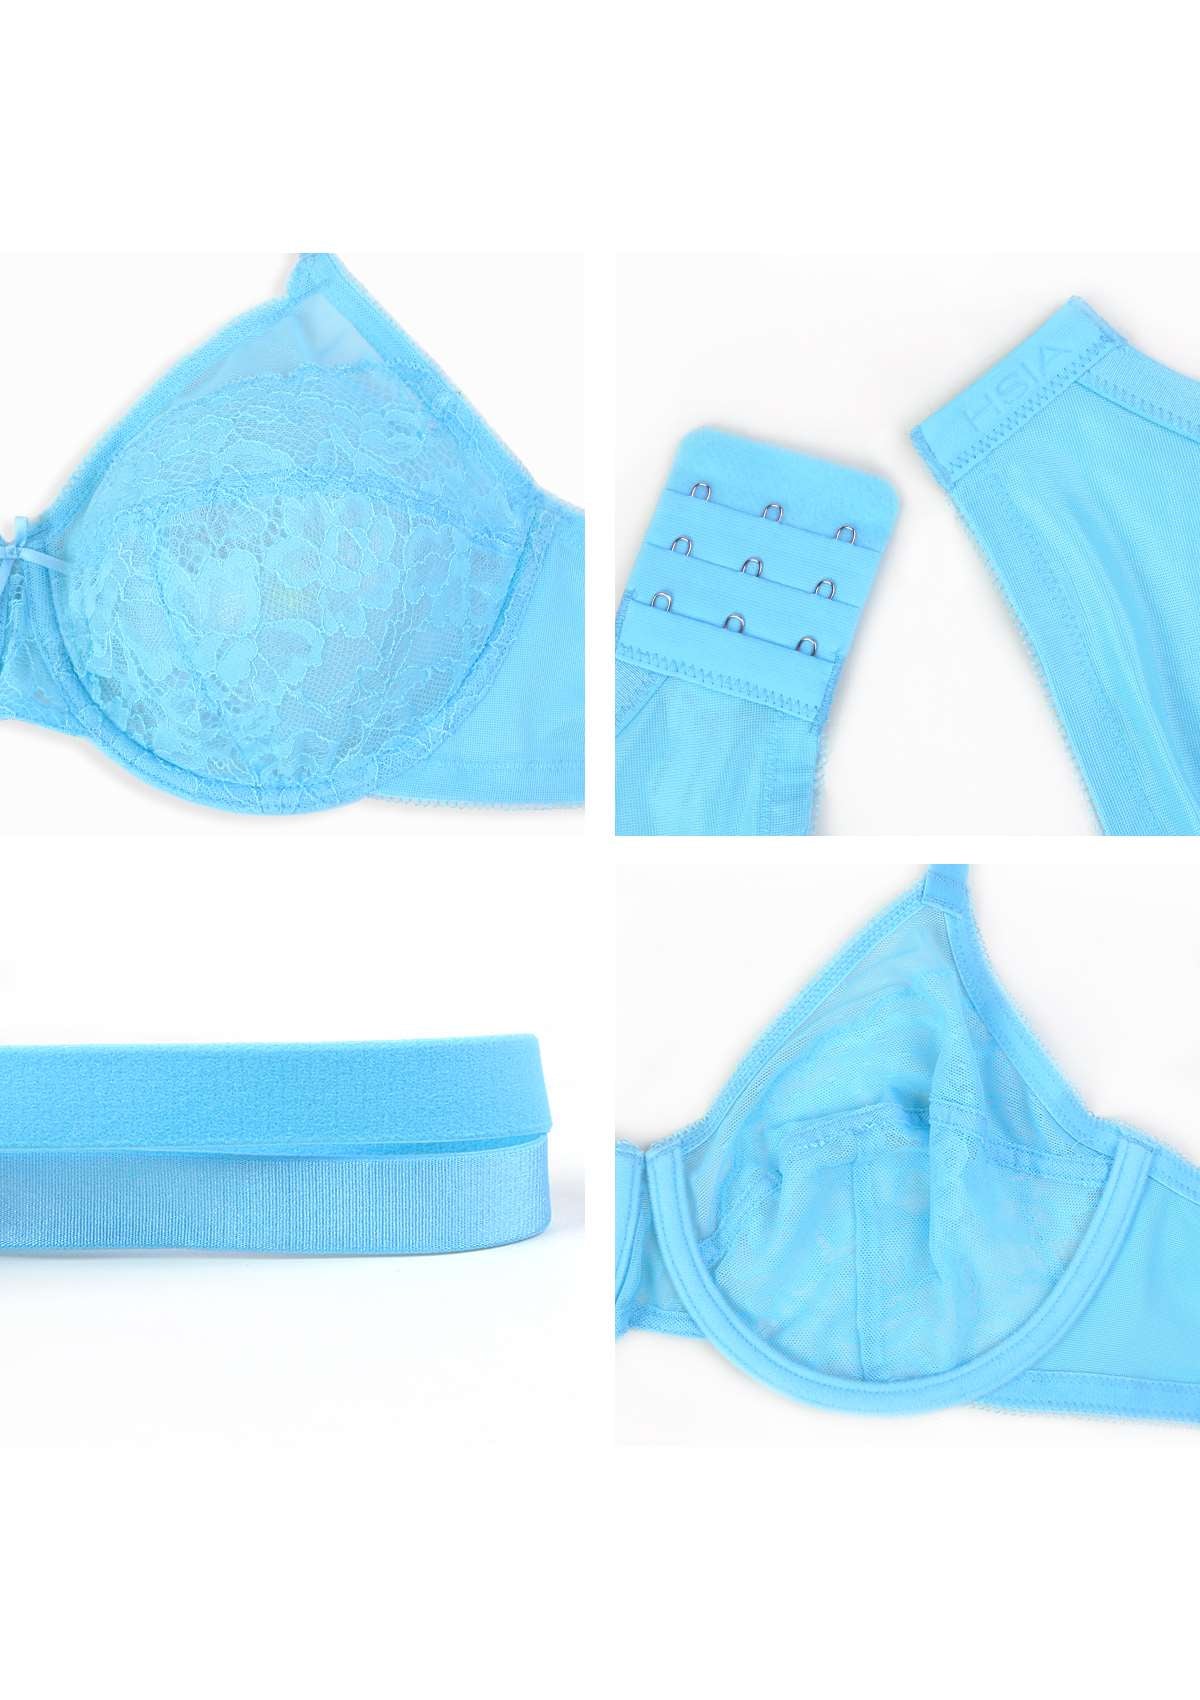 HSIA Enchante Minimizer Lace Bra: Full Support For Heavy Breasts - Capri Blue / 36 / D